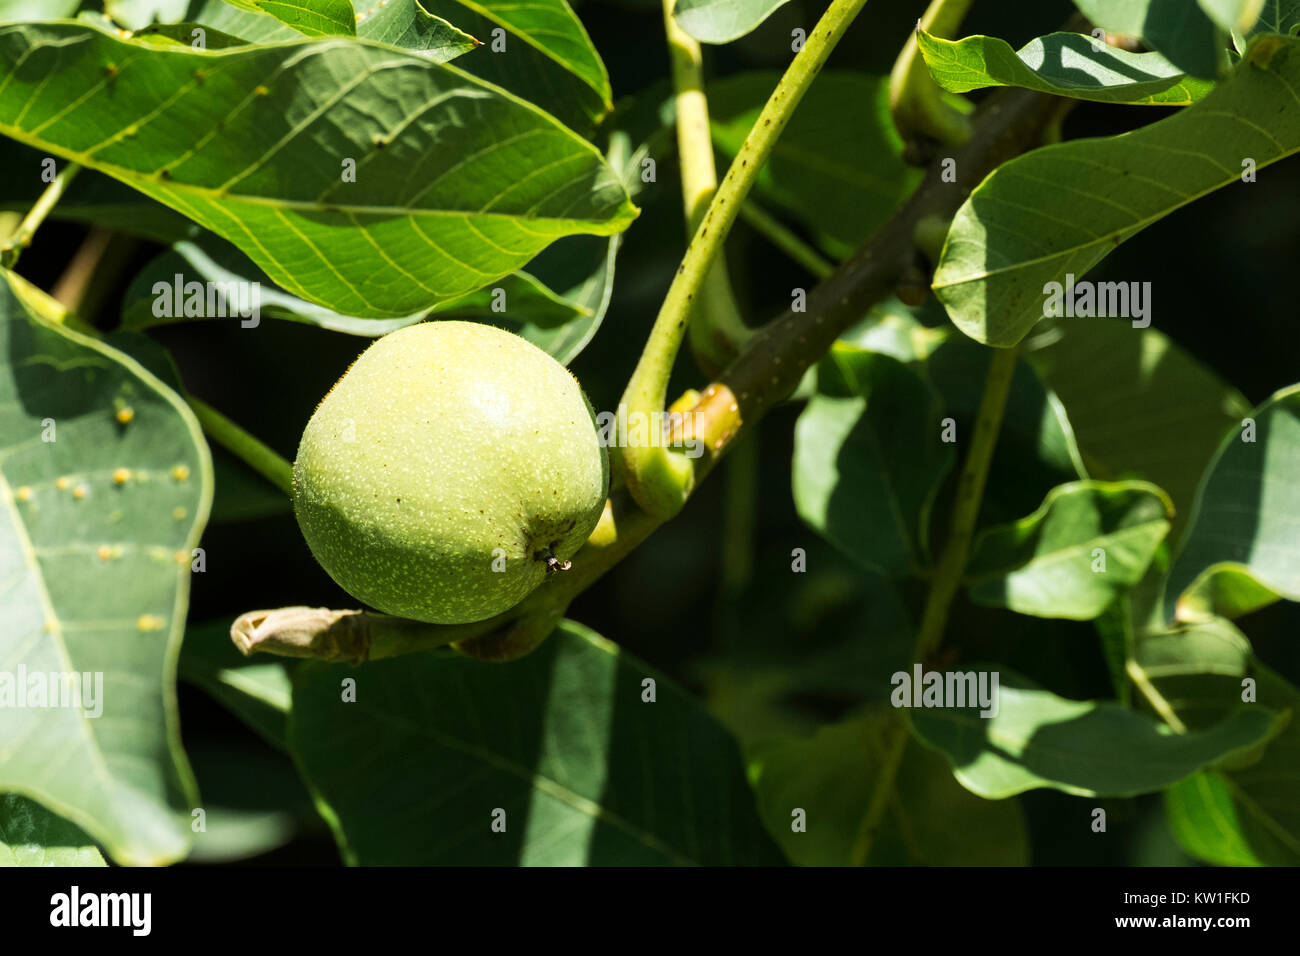 Fruit of a common walnut in a green peel among green foliage (Juglans regia) Stock Photo